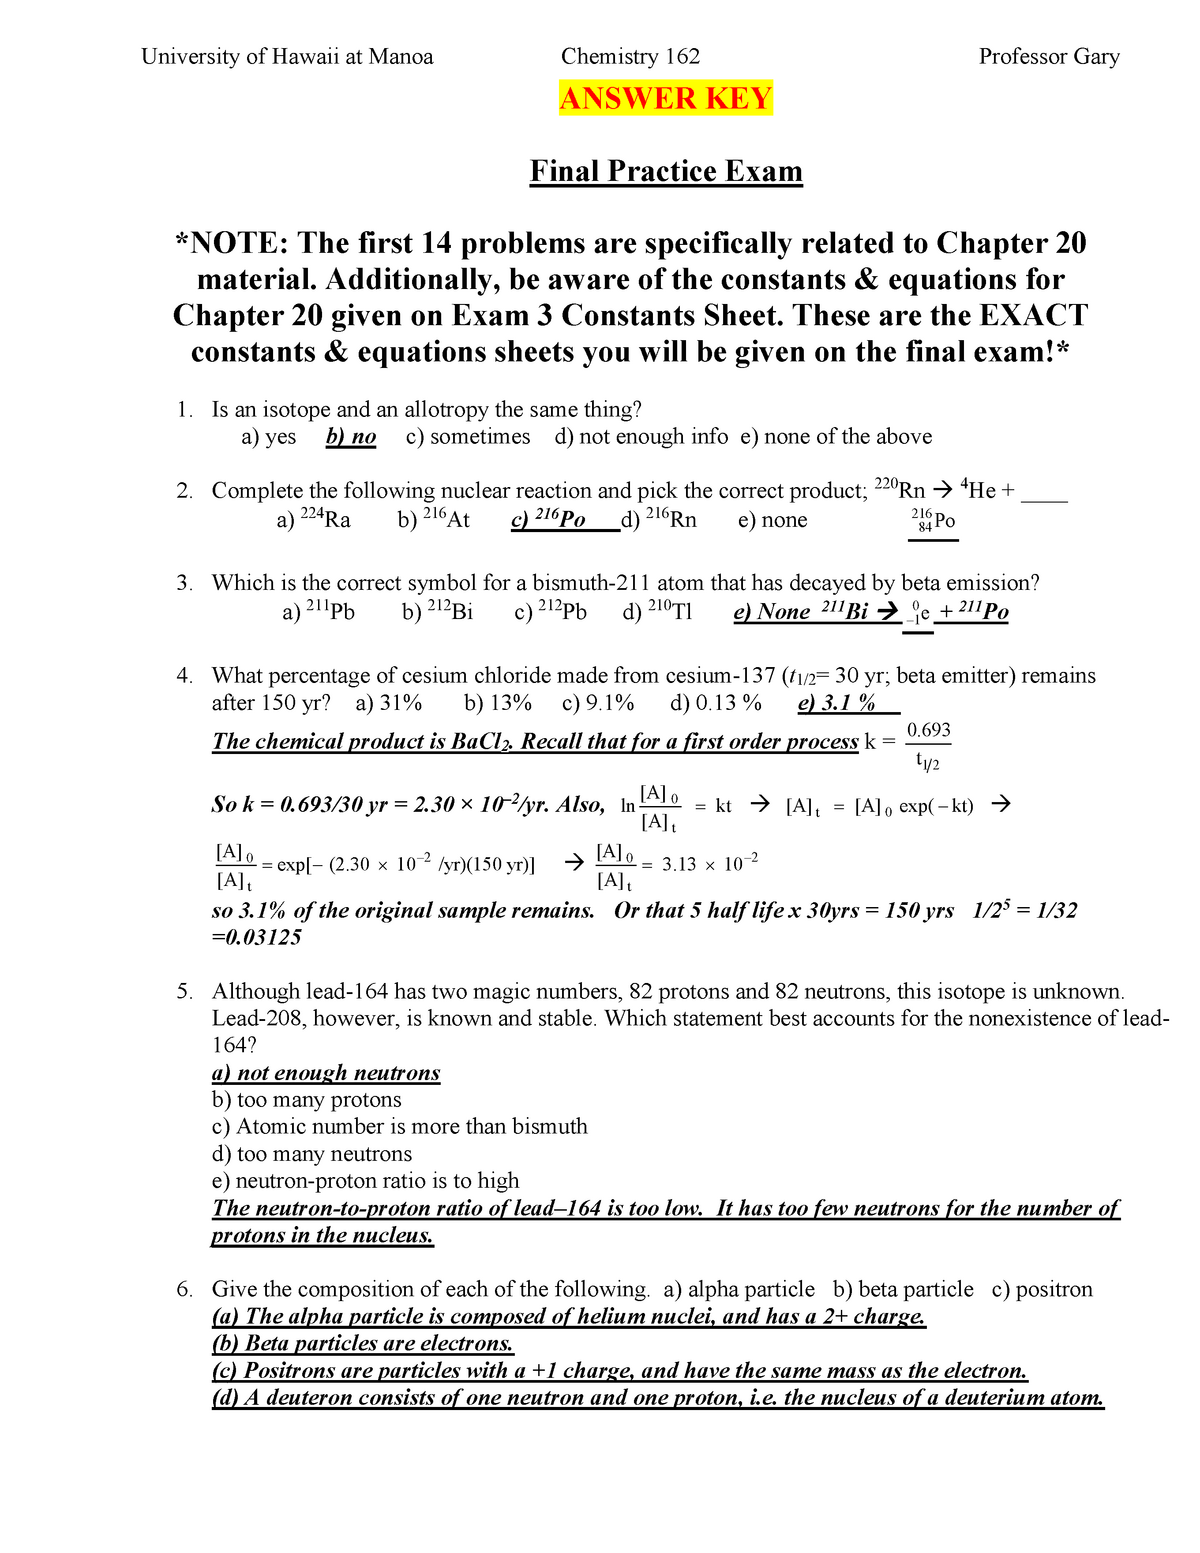 Chemistry Final Exam Answer Key - Https Www Chem Tamu Edu Rgroup Wooley ...